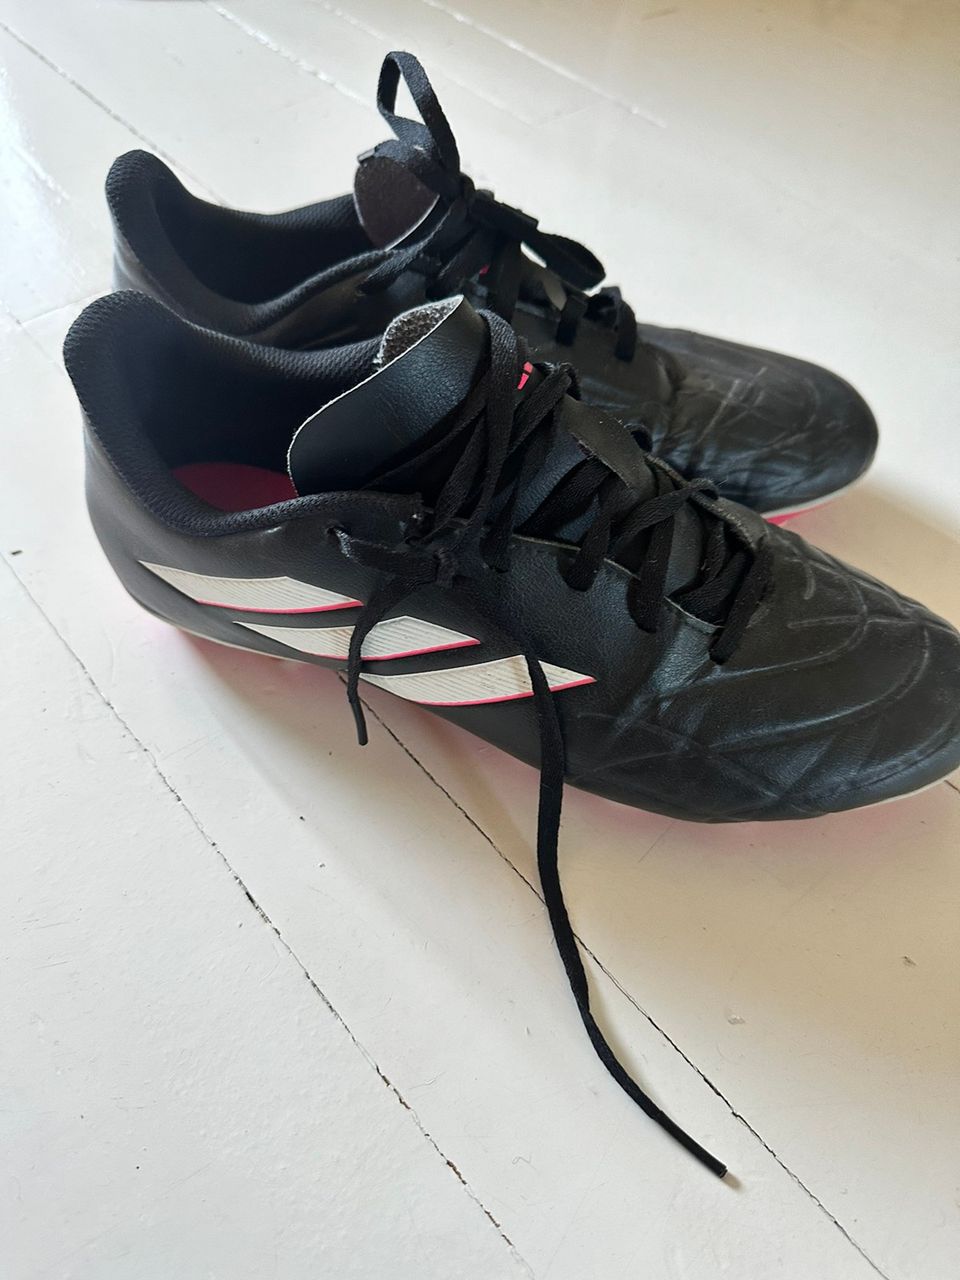 Adidas jalkapallo kengät